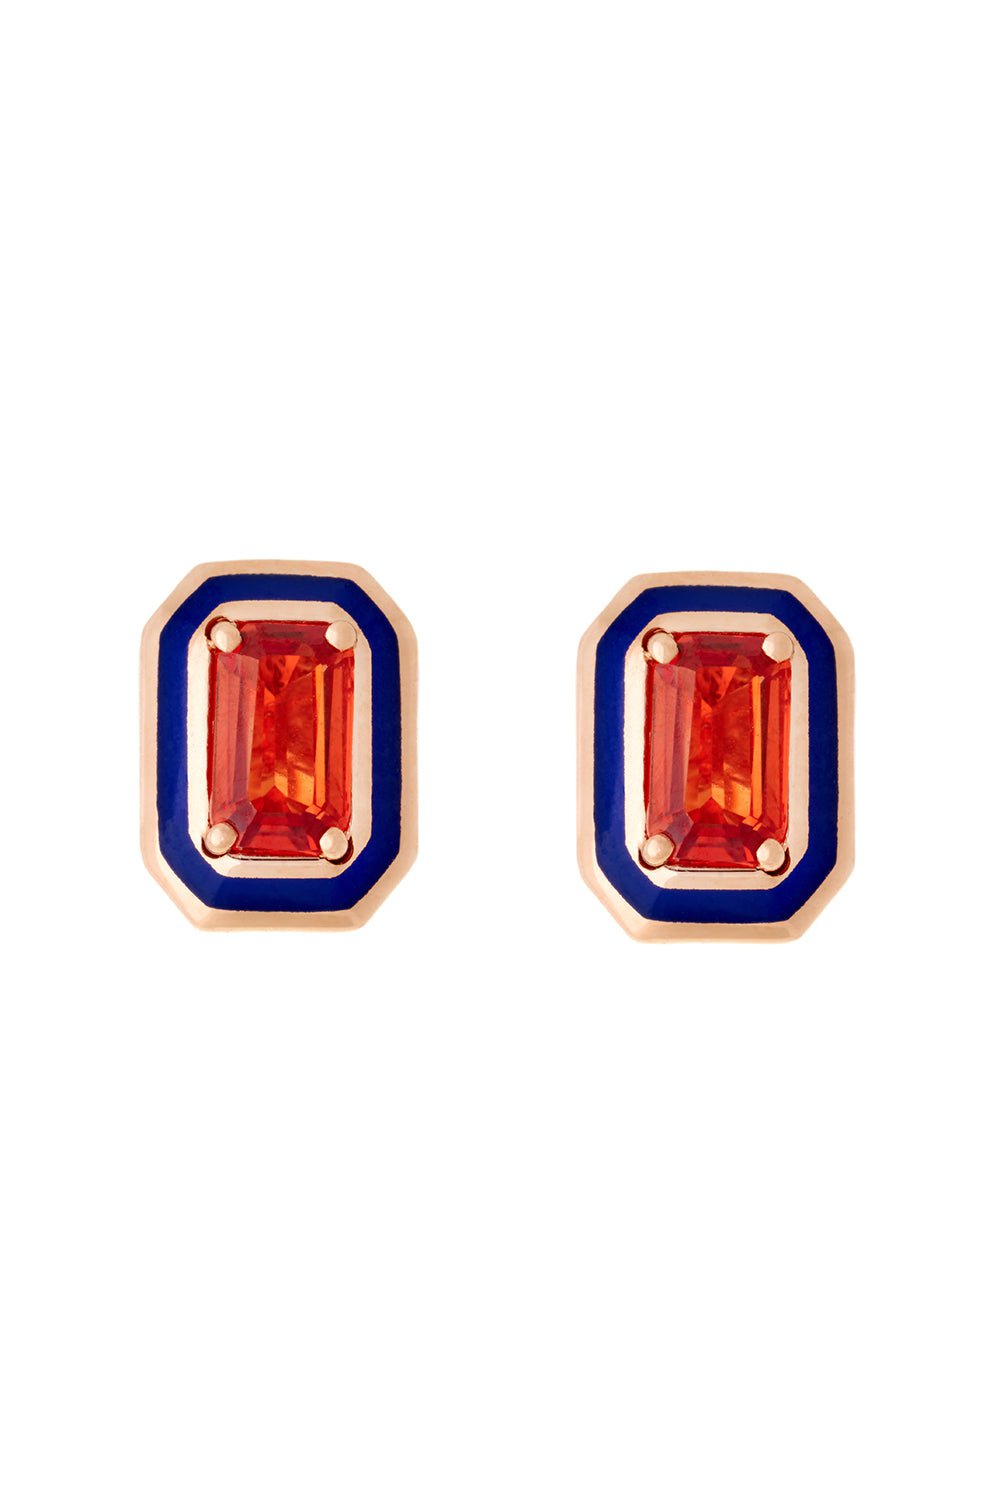 SELIM MOUZANNAR-Mina Orange Sapphire Earrings-ROSE GOLD